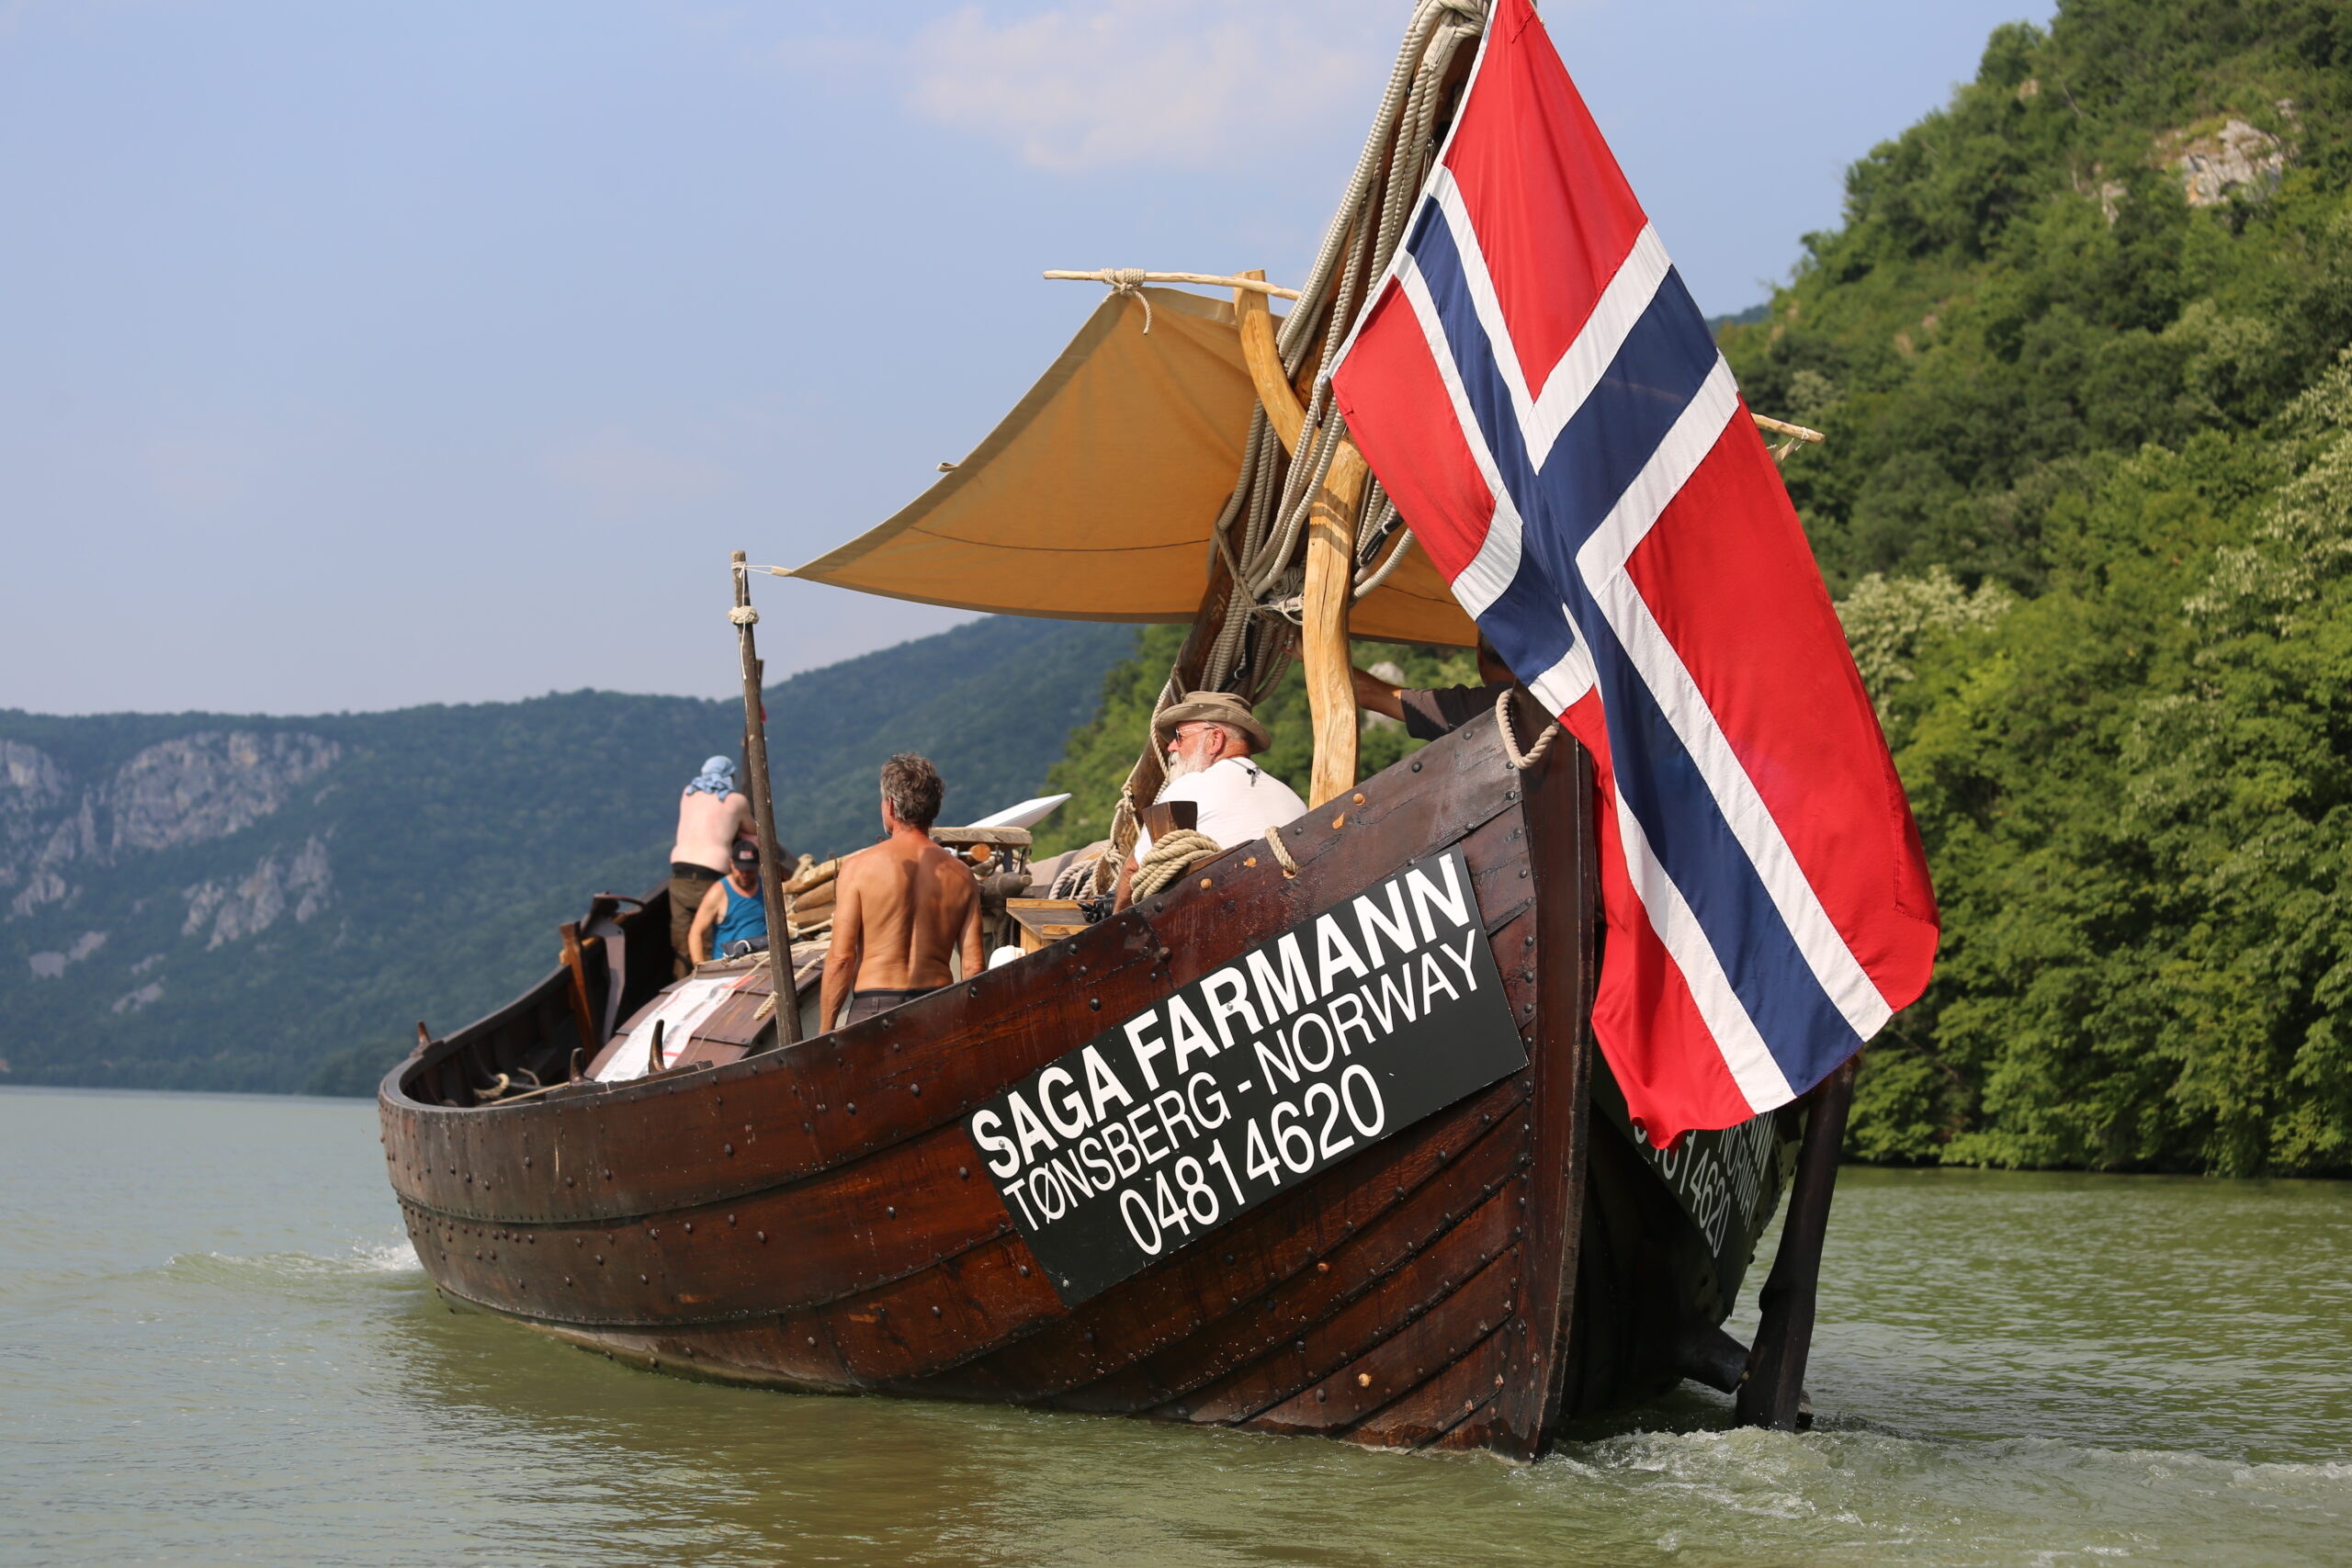 Saga Farmann på vei gjennom Europa<br />
Foto: Håkon Wium Lie